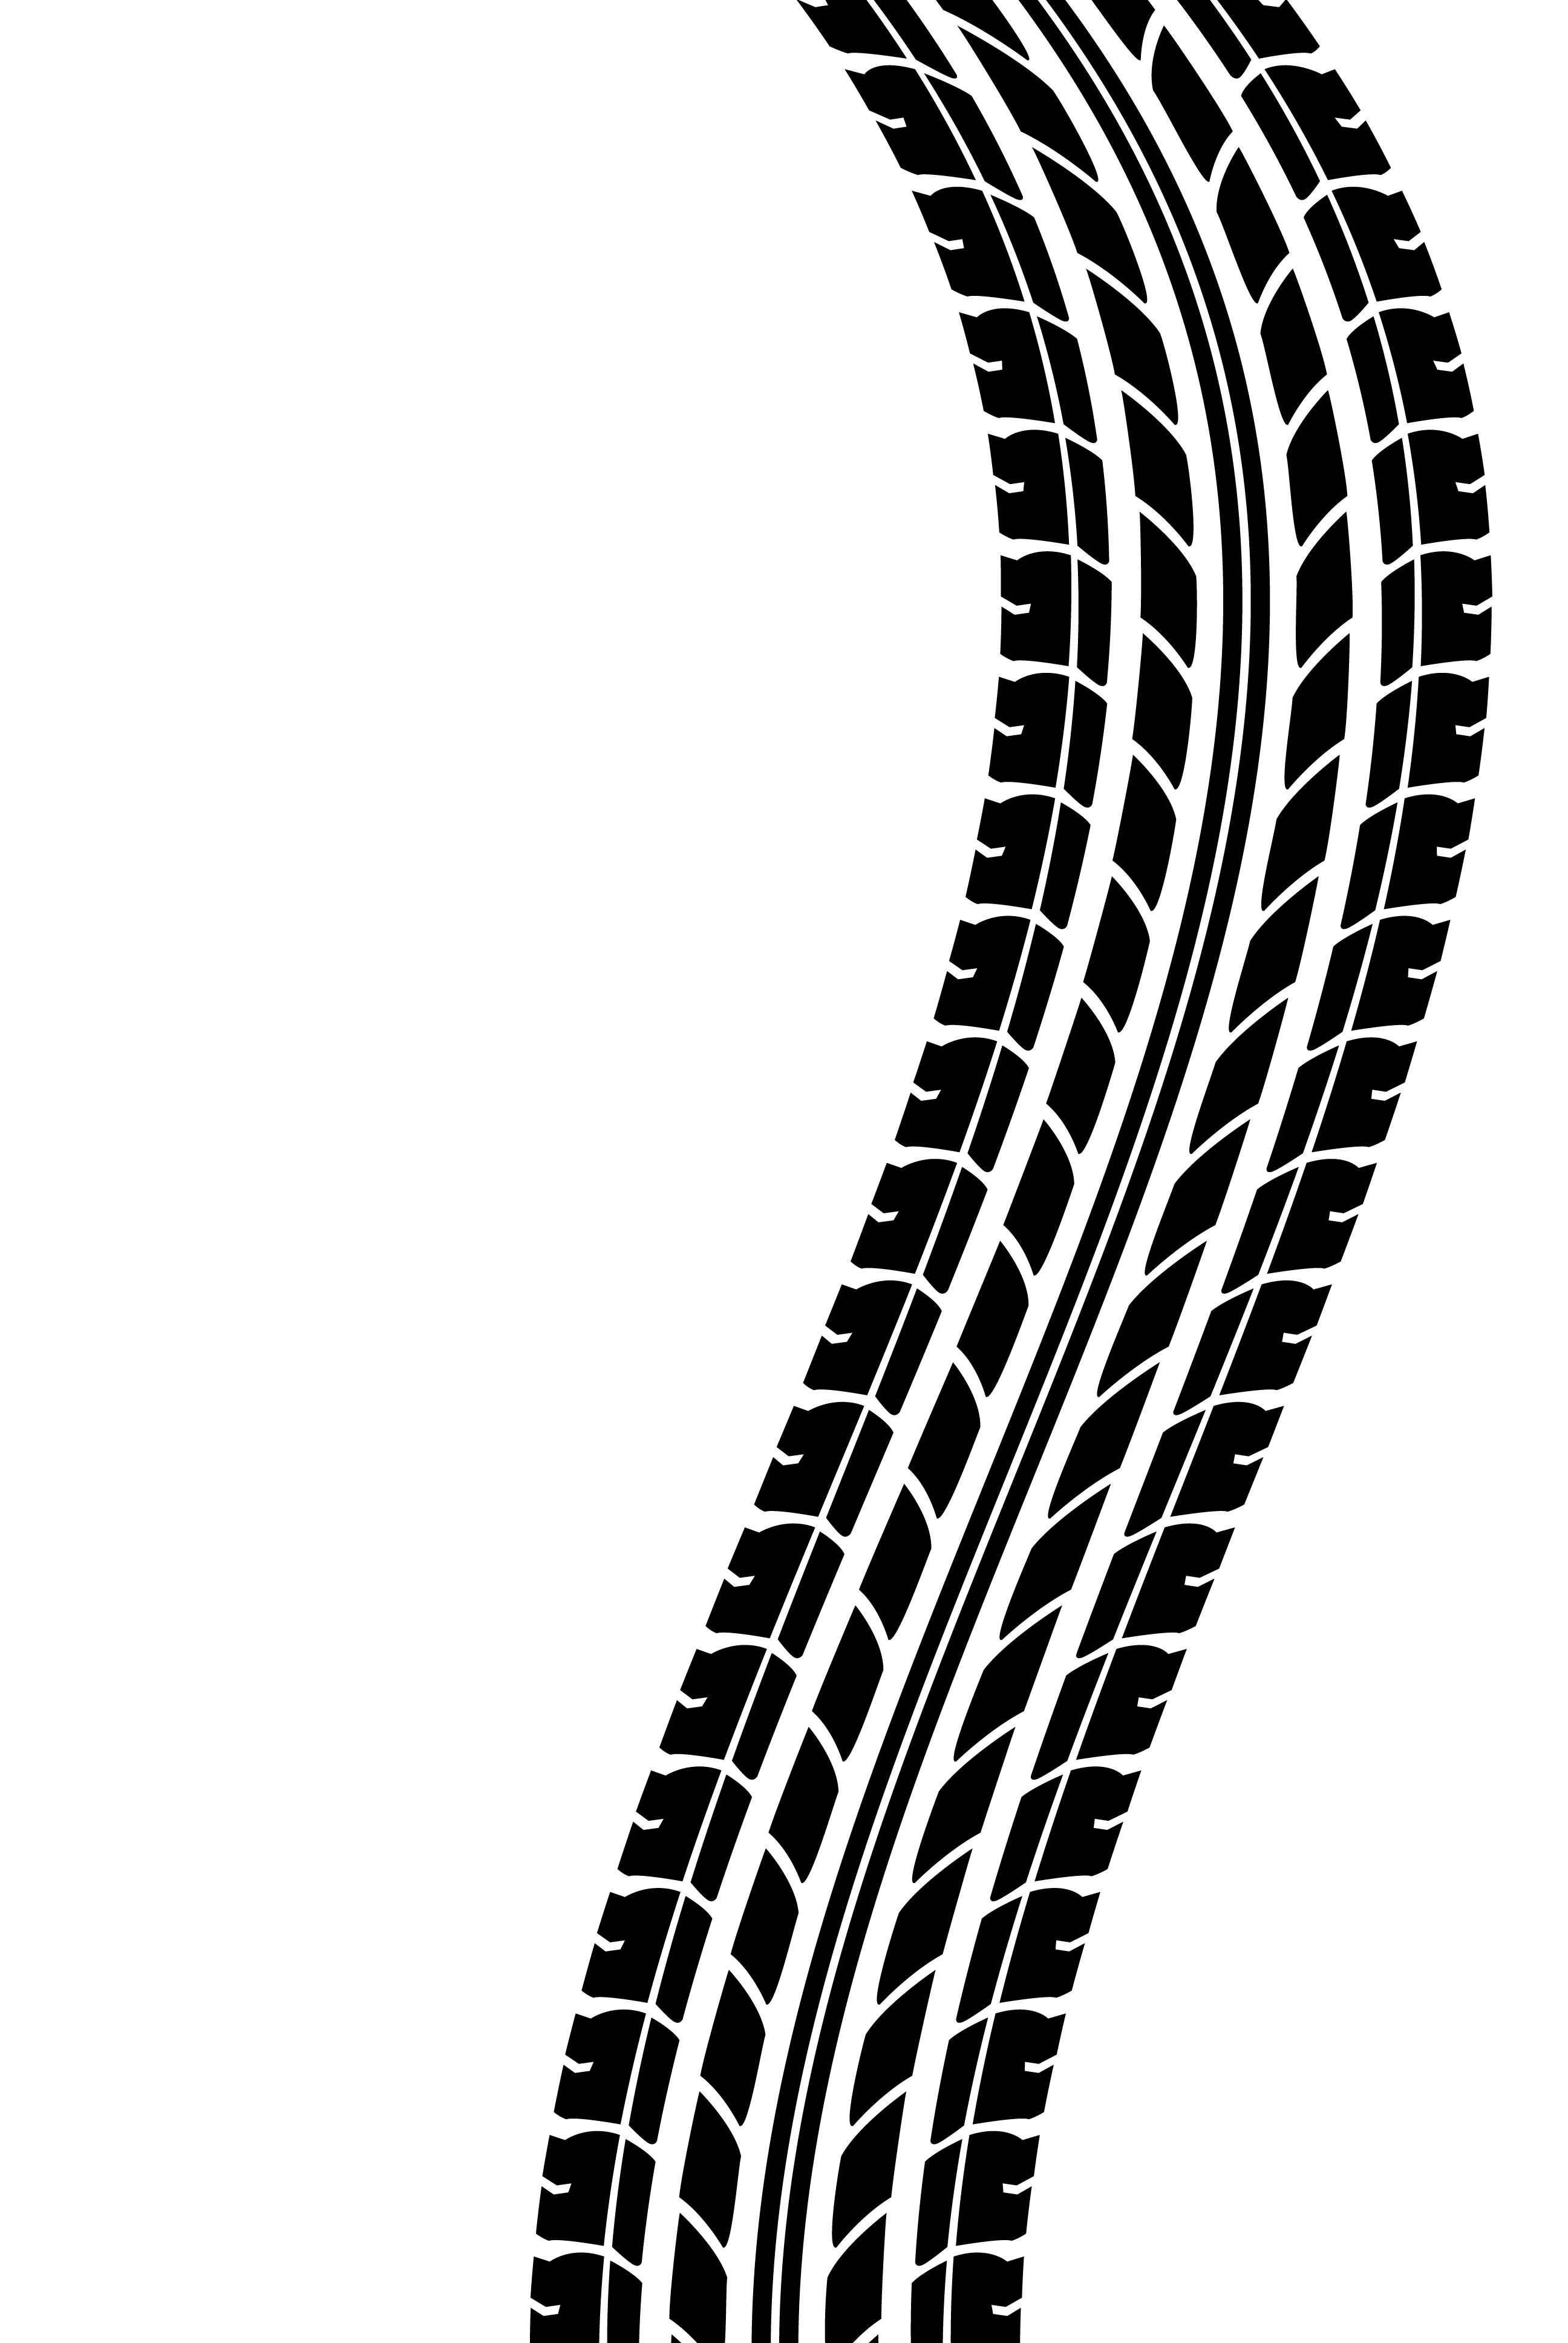 ... Tire tracks - Vector tire